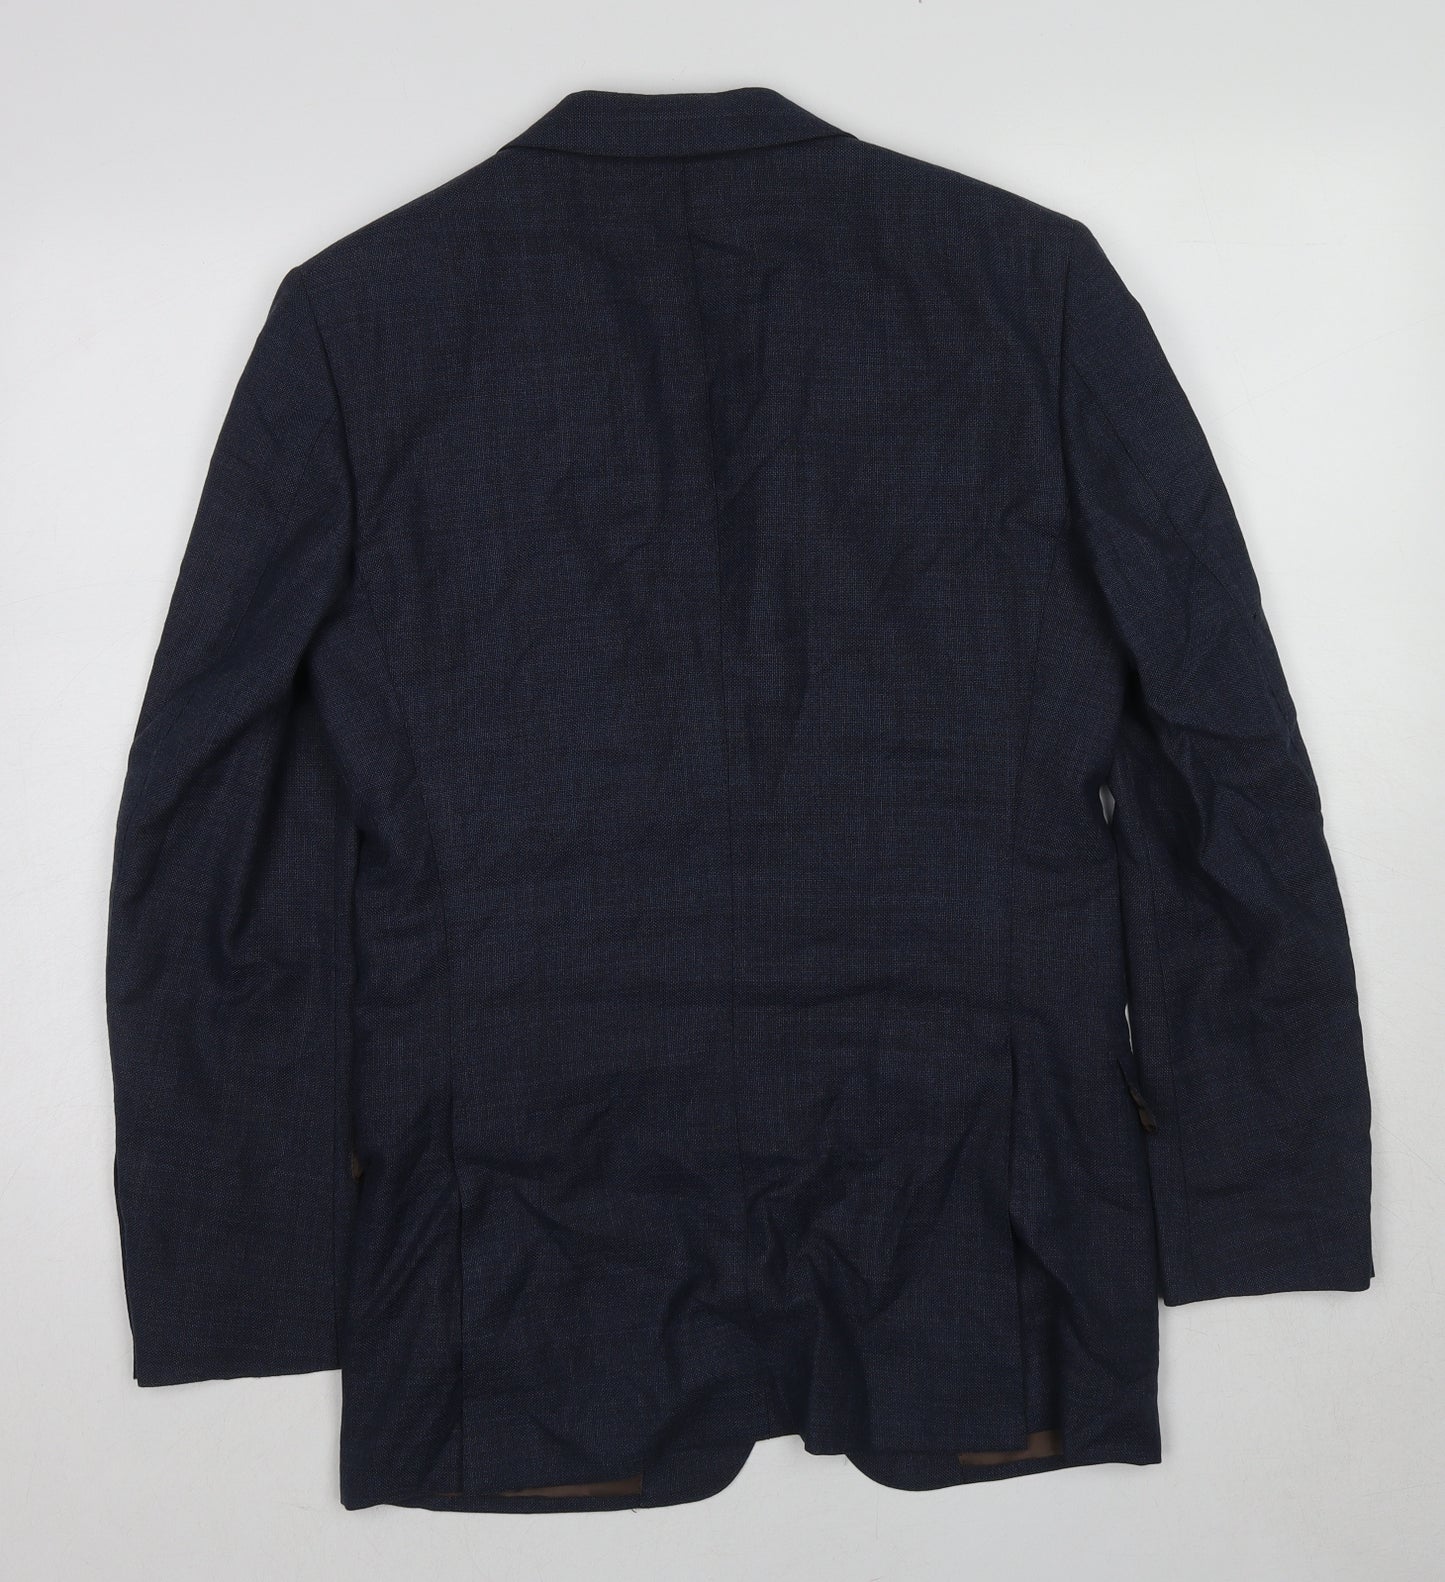 Reda Mens Blue Wool Jacket Suit Jacket Size 36 Regular - Five-Button Sleeve